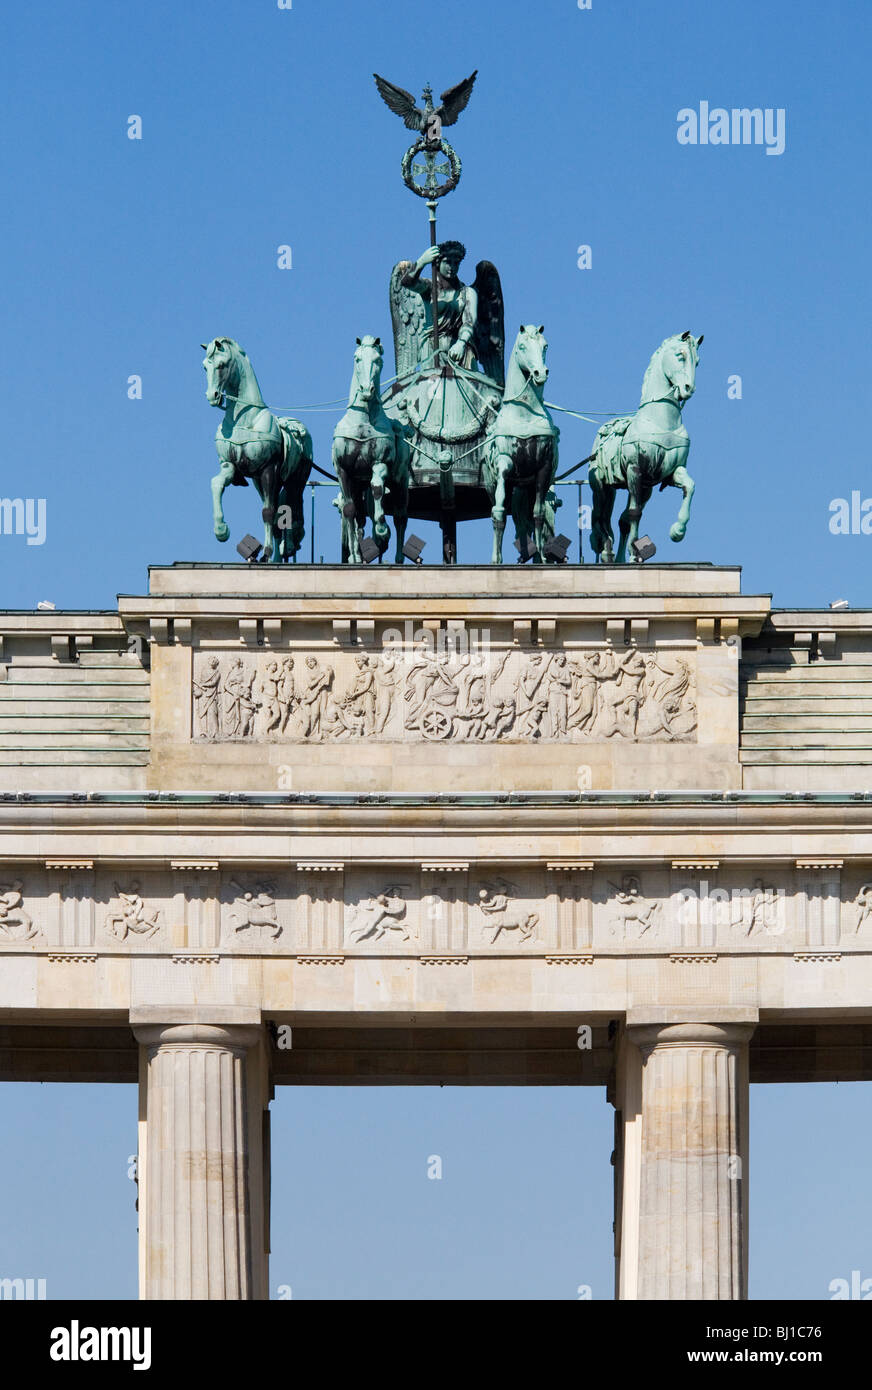 A quadriga, or four-horse chariot, atop the Brandenberg Gate (Brandemburg Tor), Pariser Platz, Berlin-Mitte, Germany Stock Photo